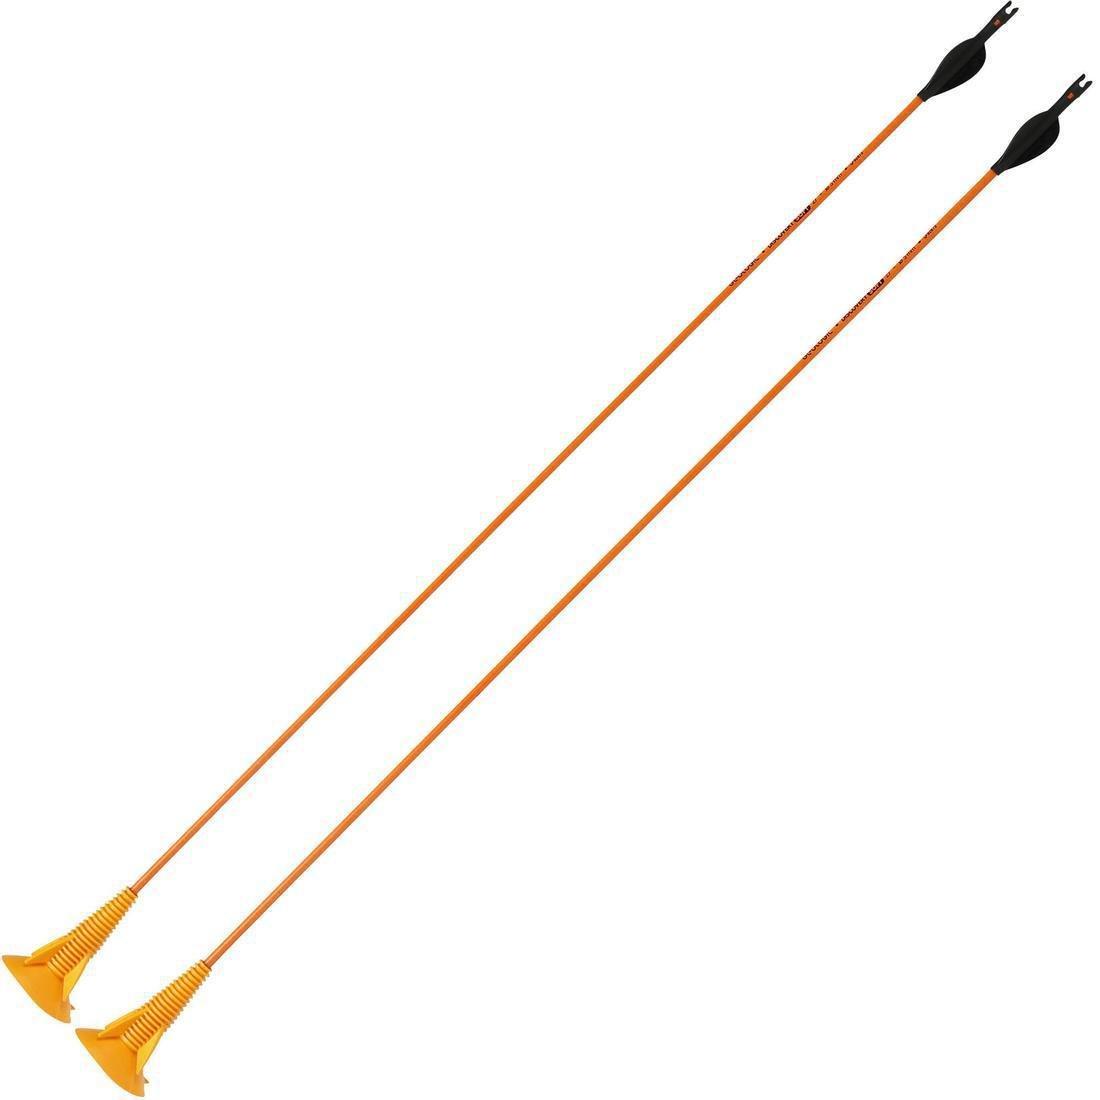 GEOLOGIC - 27 Archery Arrows Twin-Pack Discosoft, Lime Green